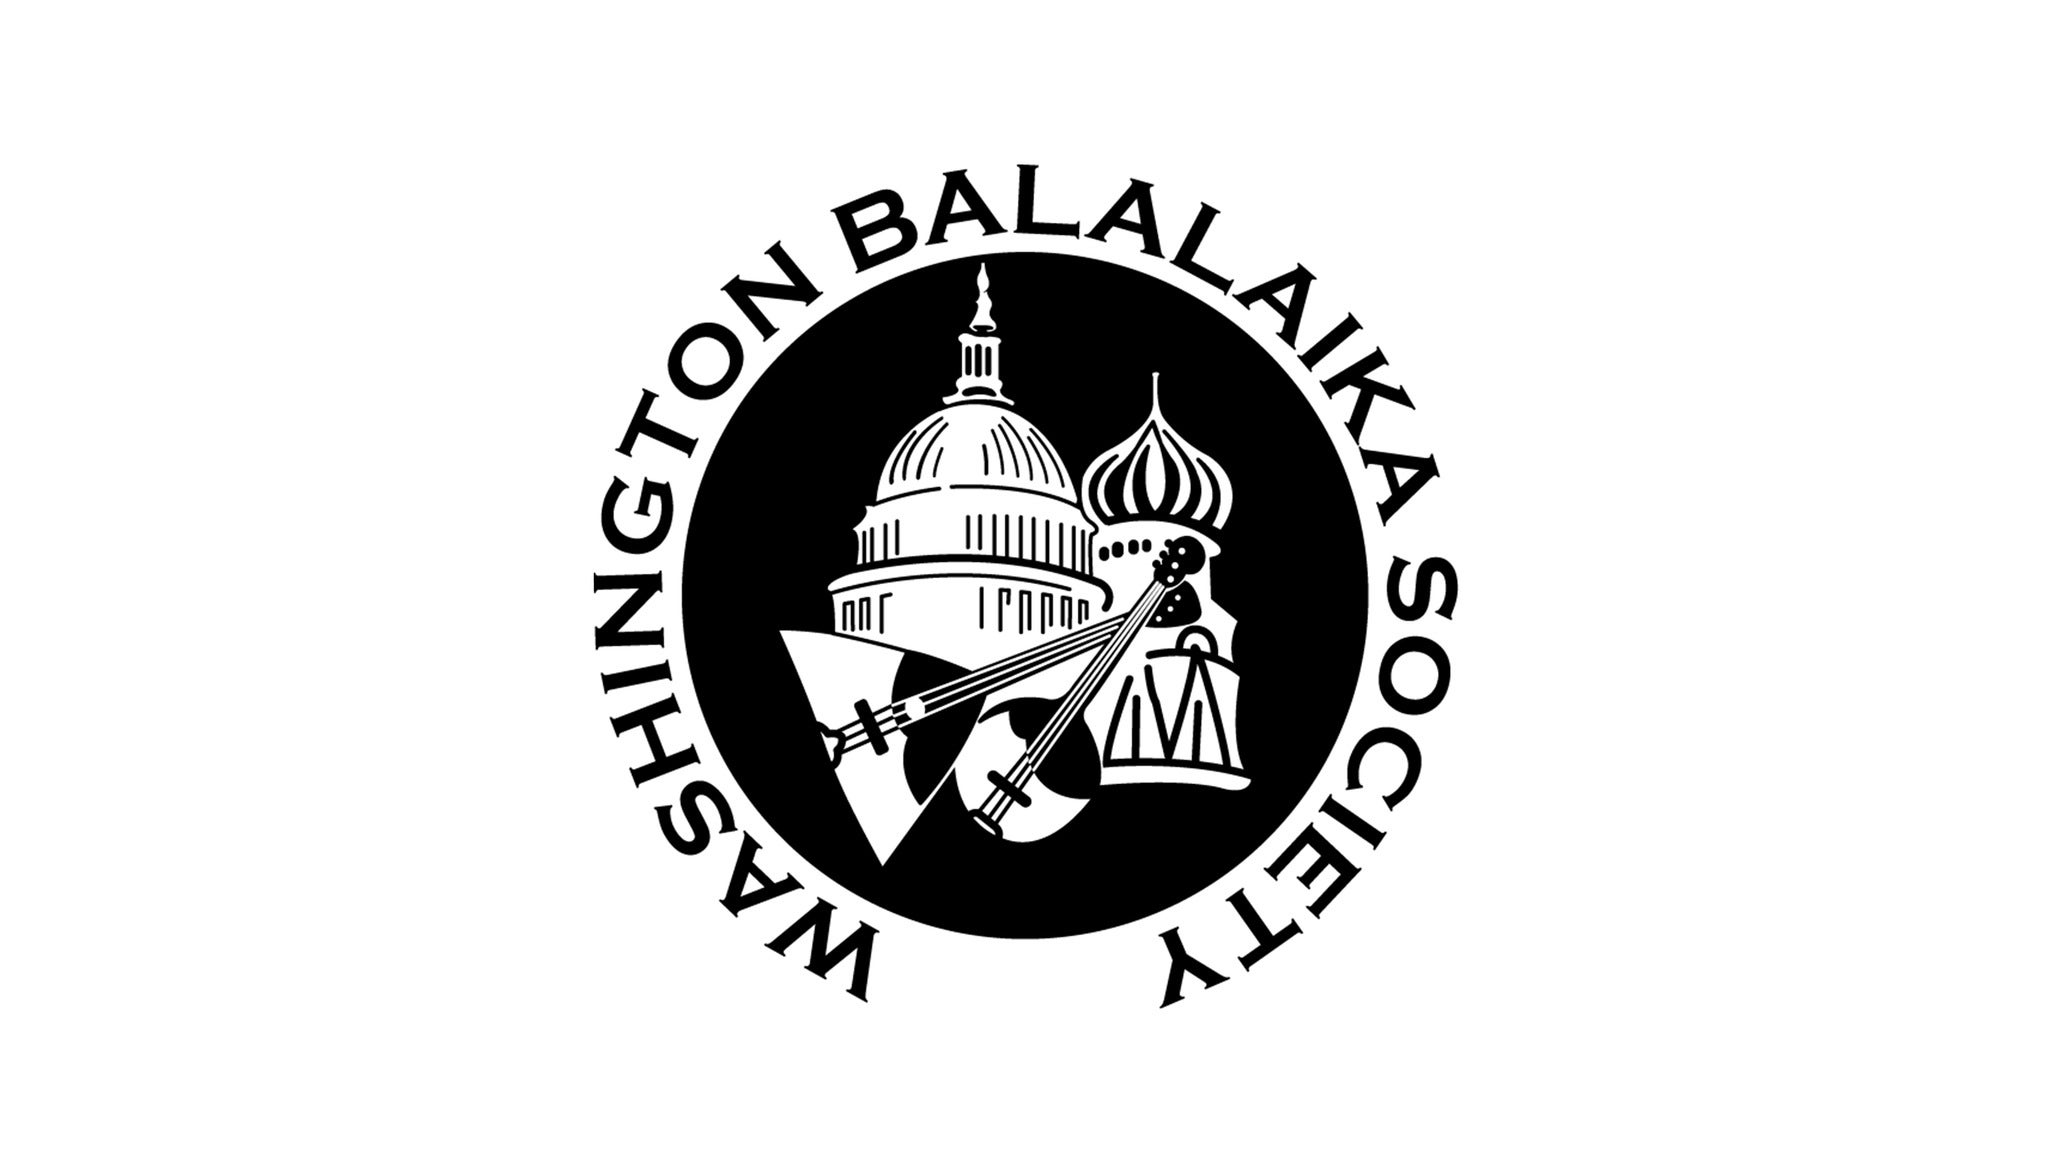 Washington Balalaika Society presale information on freepresalepasswords.com